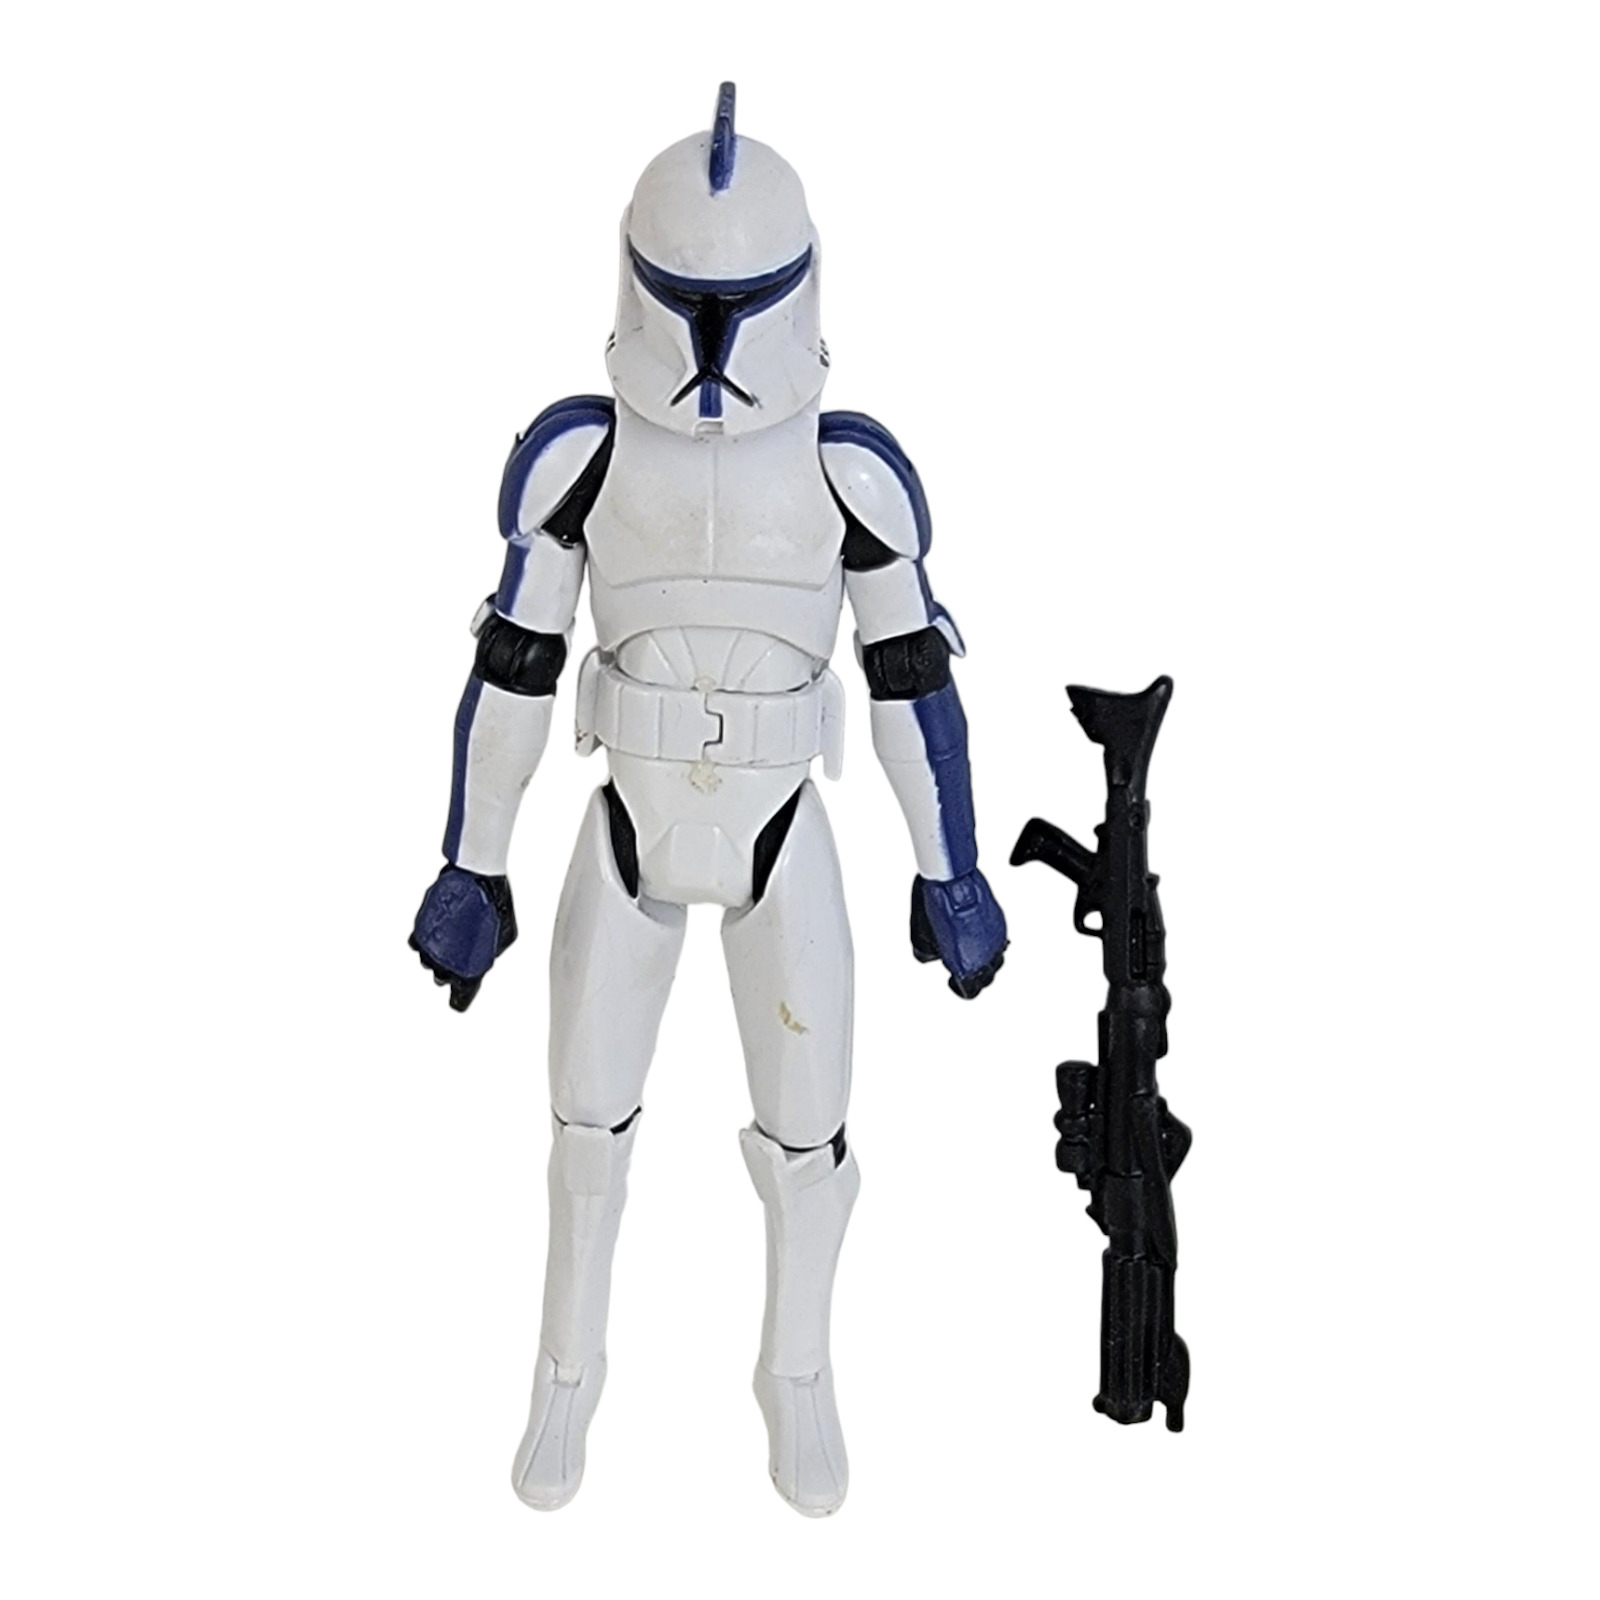 Hasbro Star Wars Clone Trooper Action Figure w/ Accessory